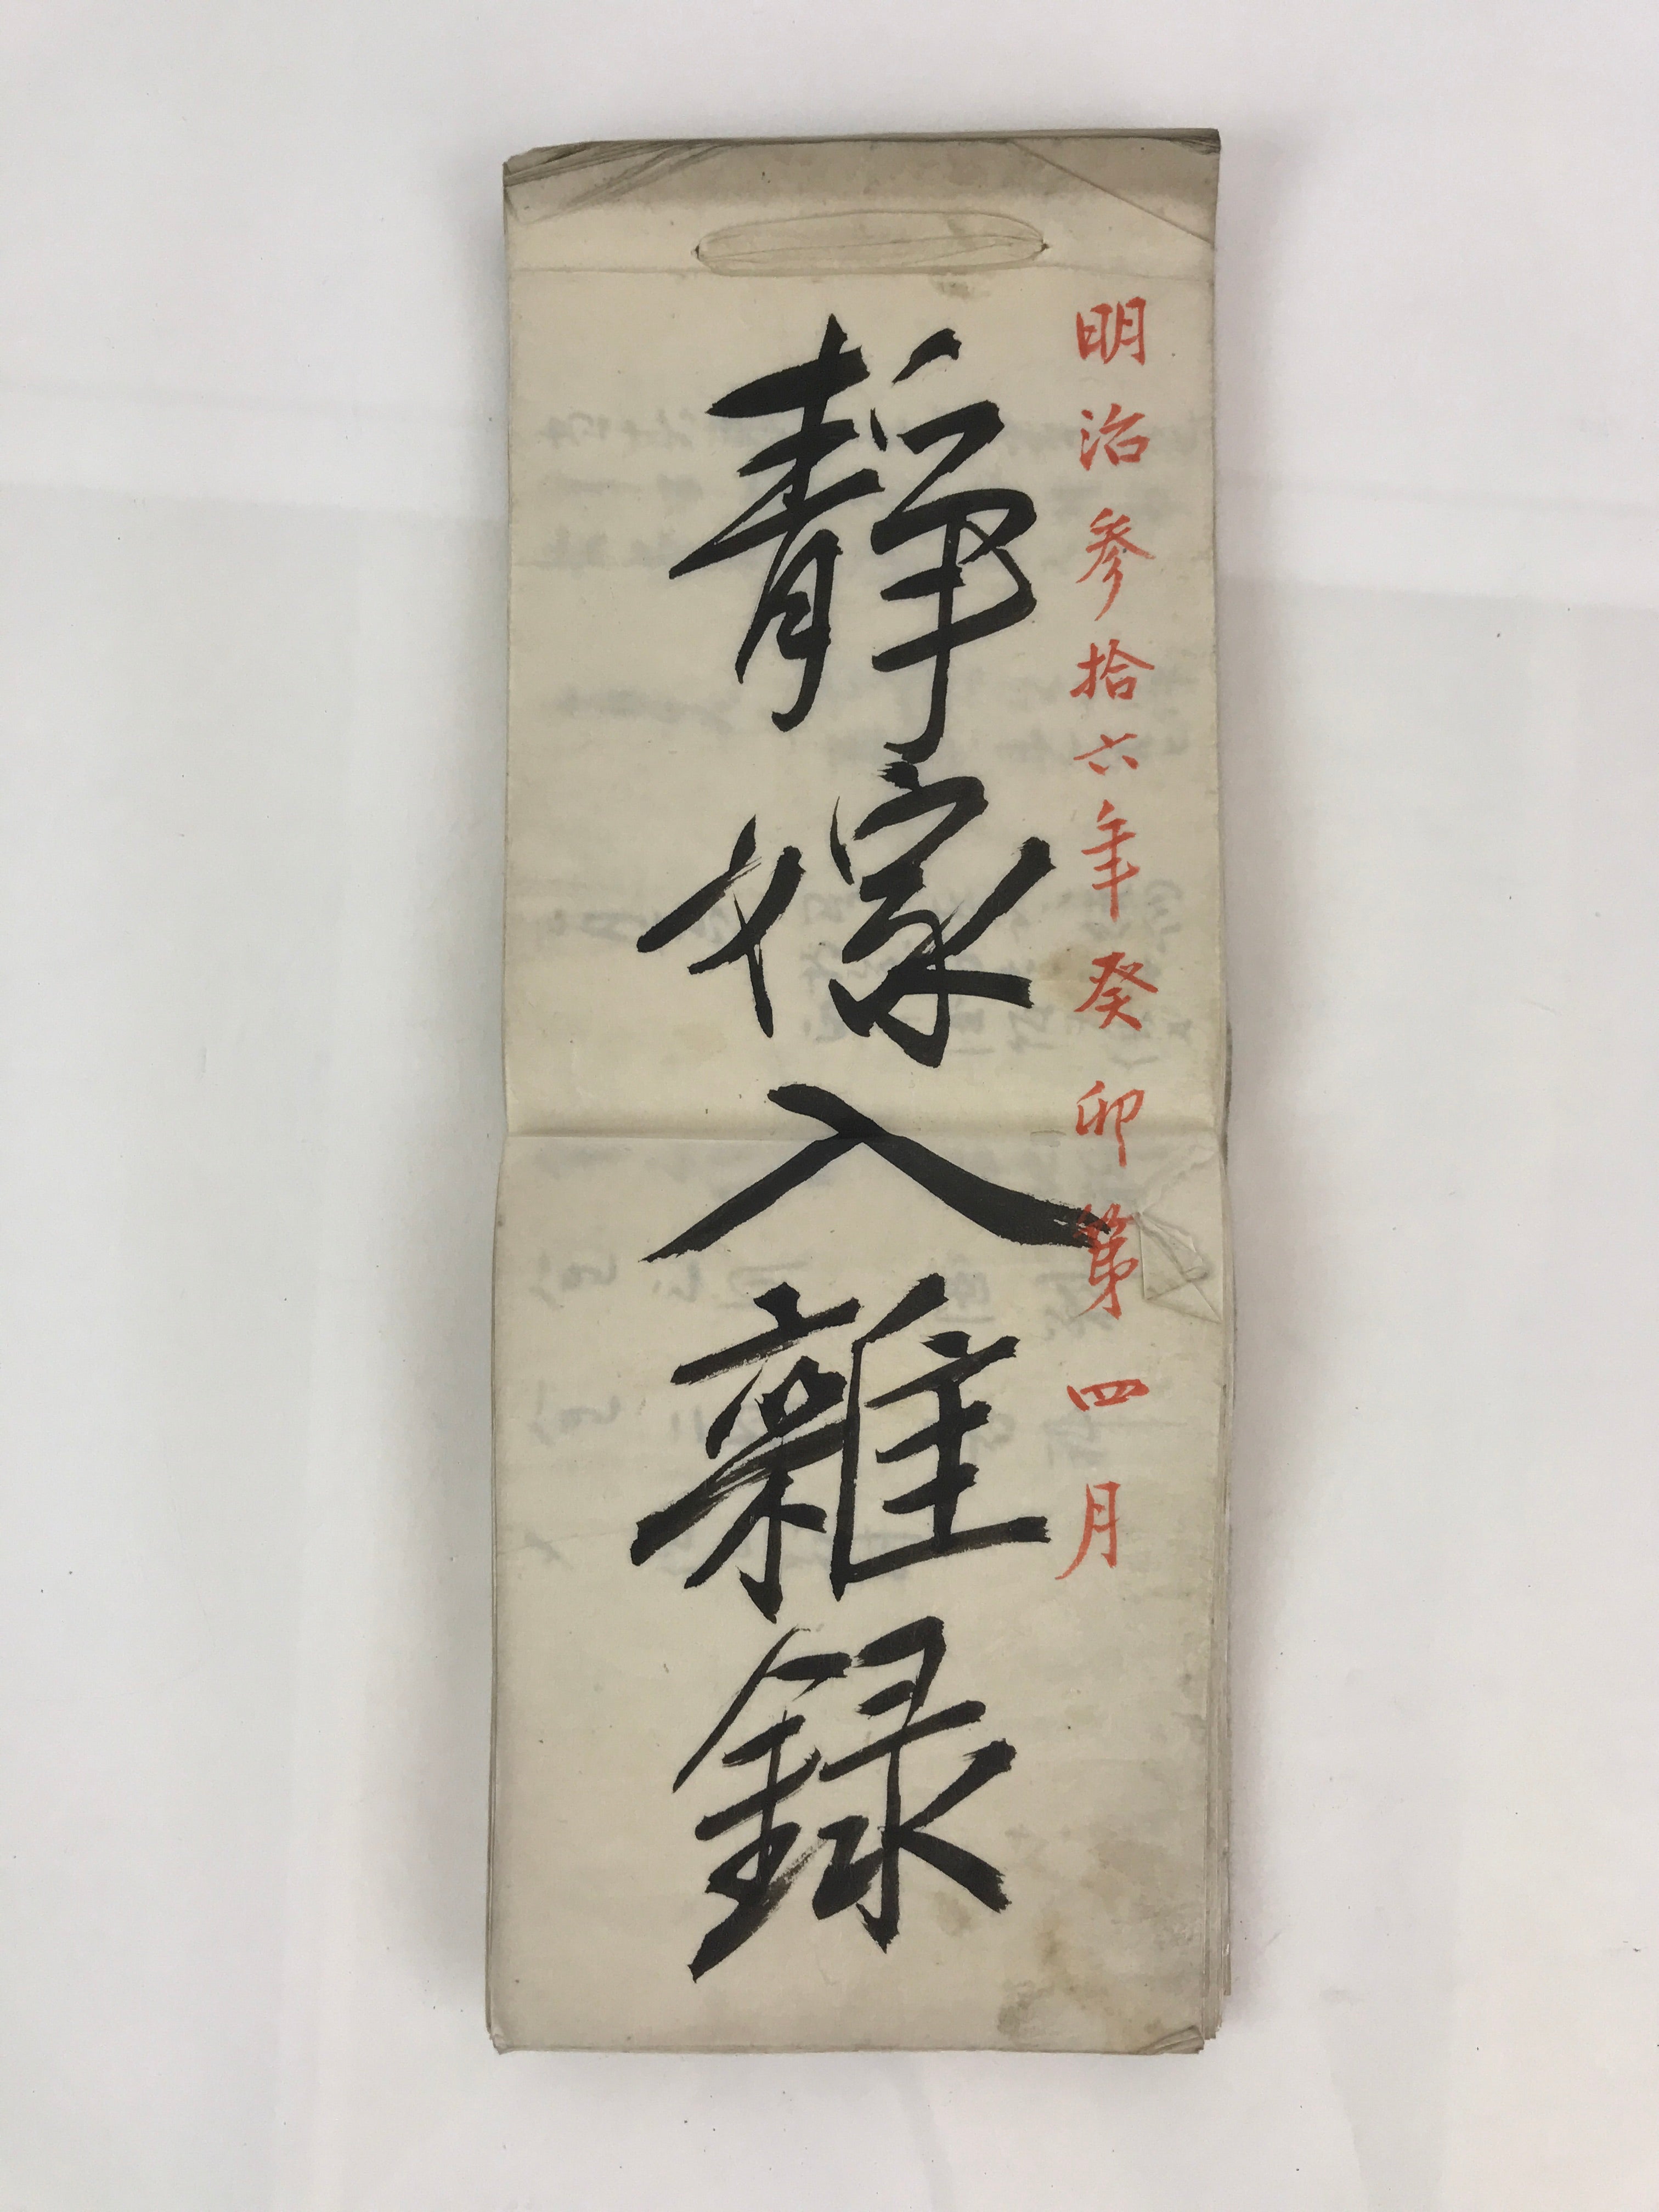 Antique C1903 Japanese Marriage Record Book Meijji Period Paper P316